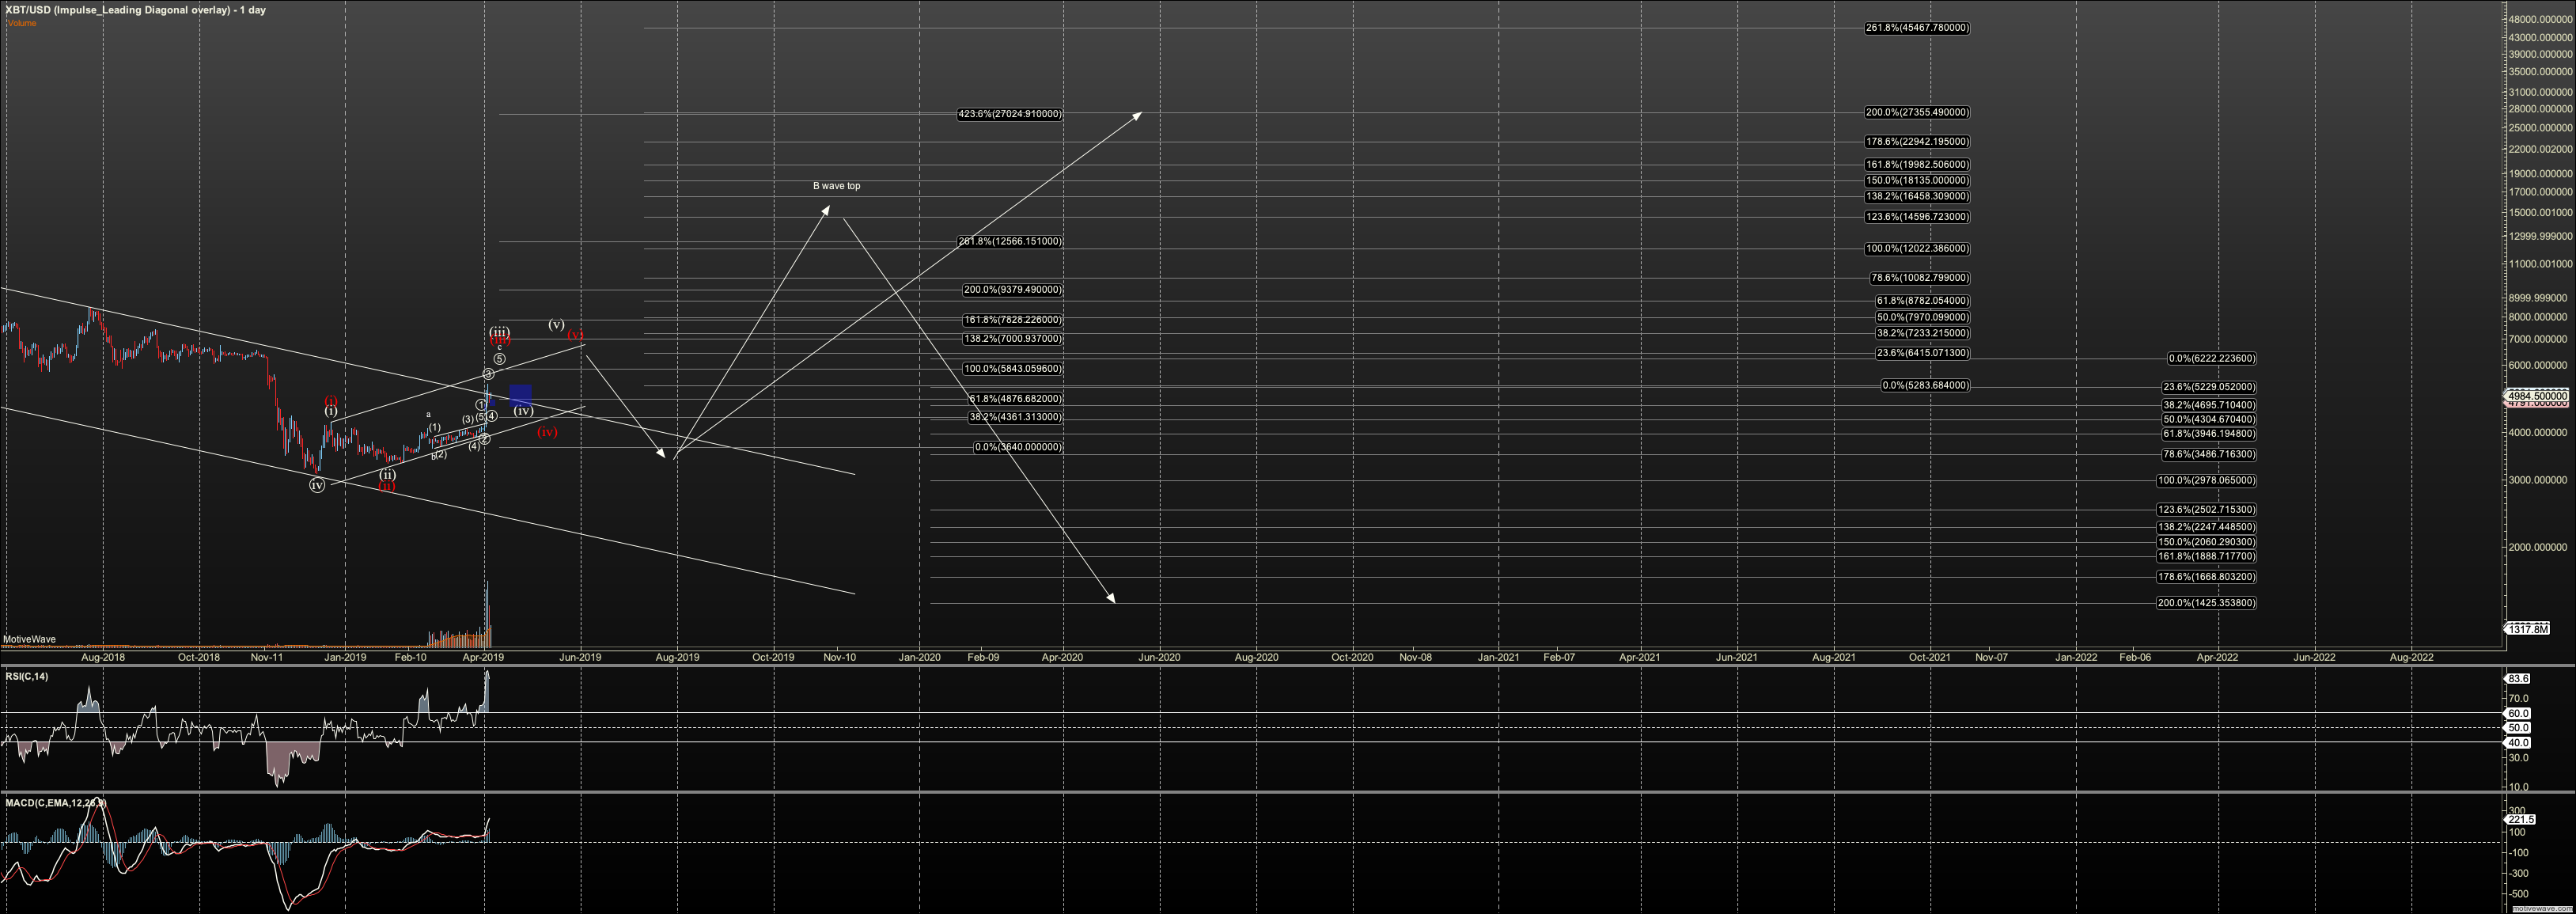 XBTUSD - Impulse Leading Diagonal overlay - Apr-05 1634 PM (1 day)